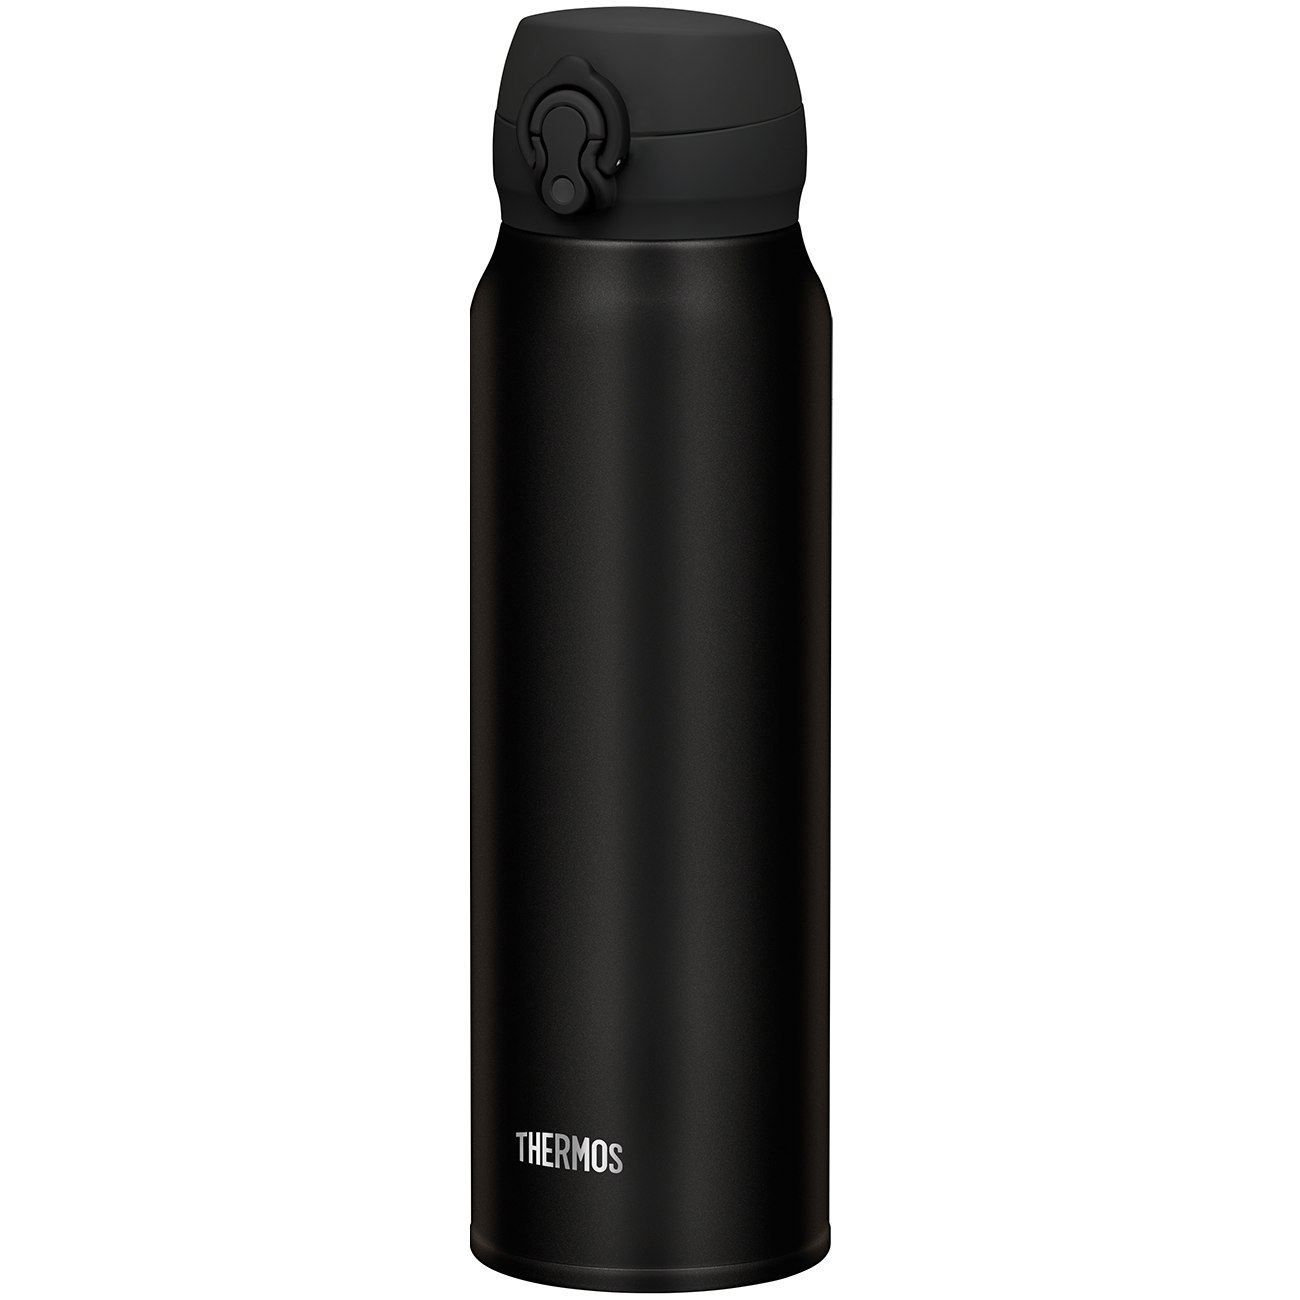 Productfoto van THERMOS® Beverage Bottle Ultralight 0.75L - mat black